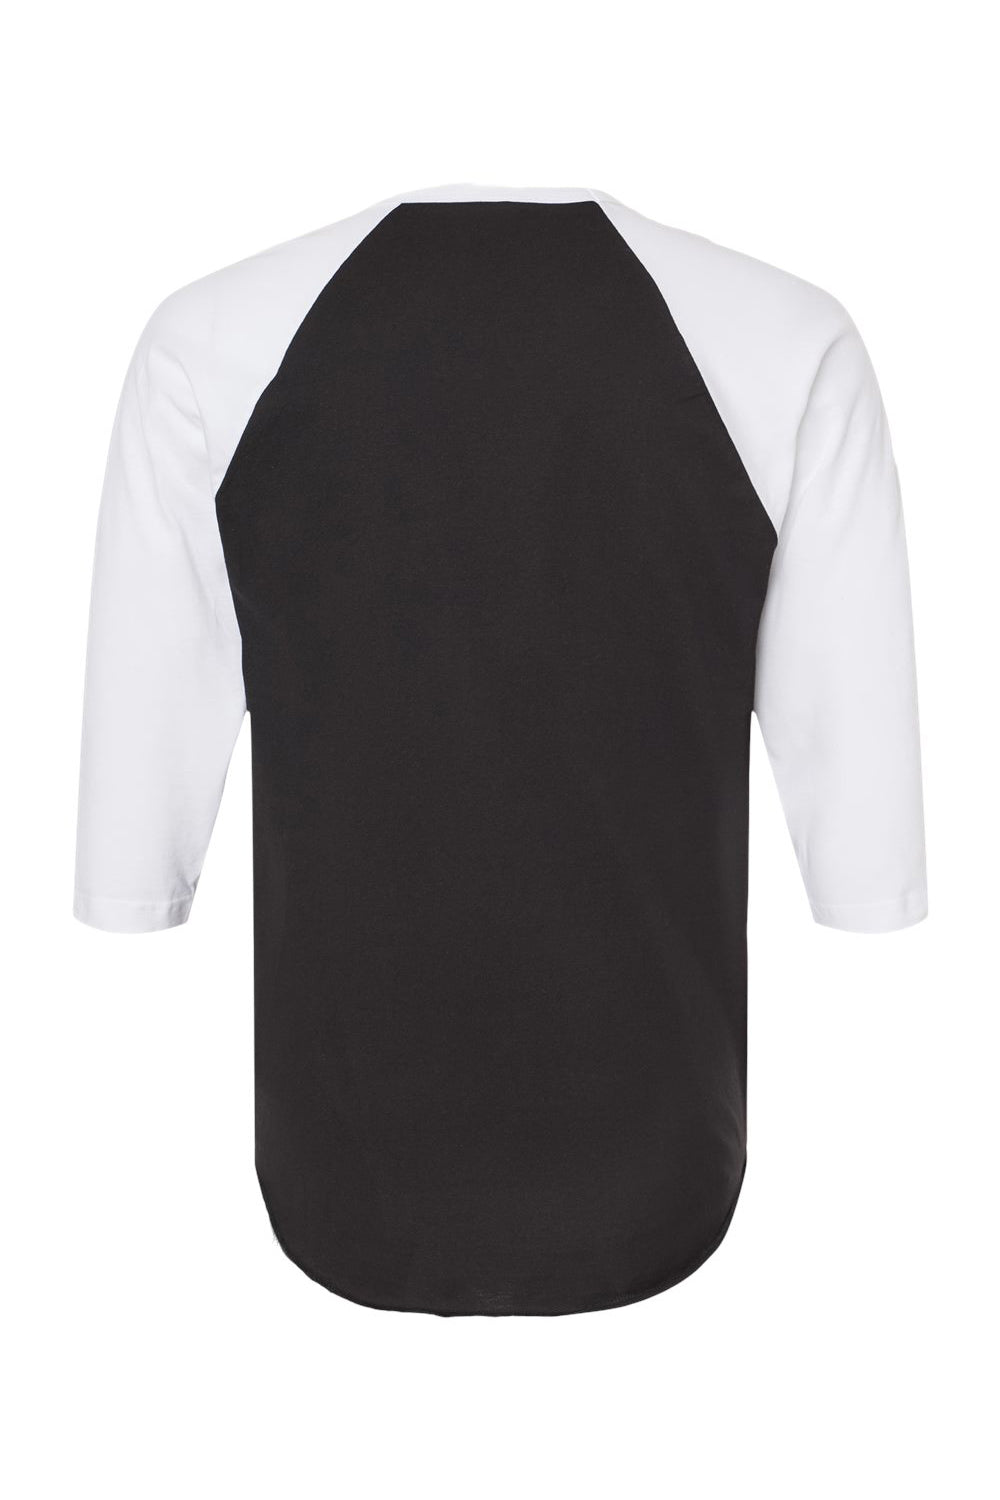 Tultex 245 Mens Fine Jersey Raglan 3/4 Sleeve Crewneck T-Shirt Black/White Flat Back